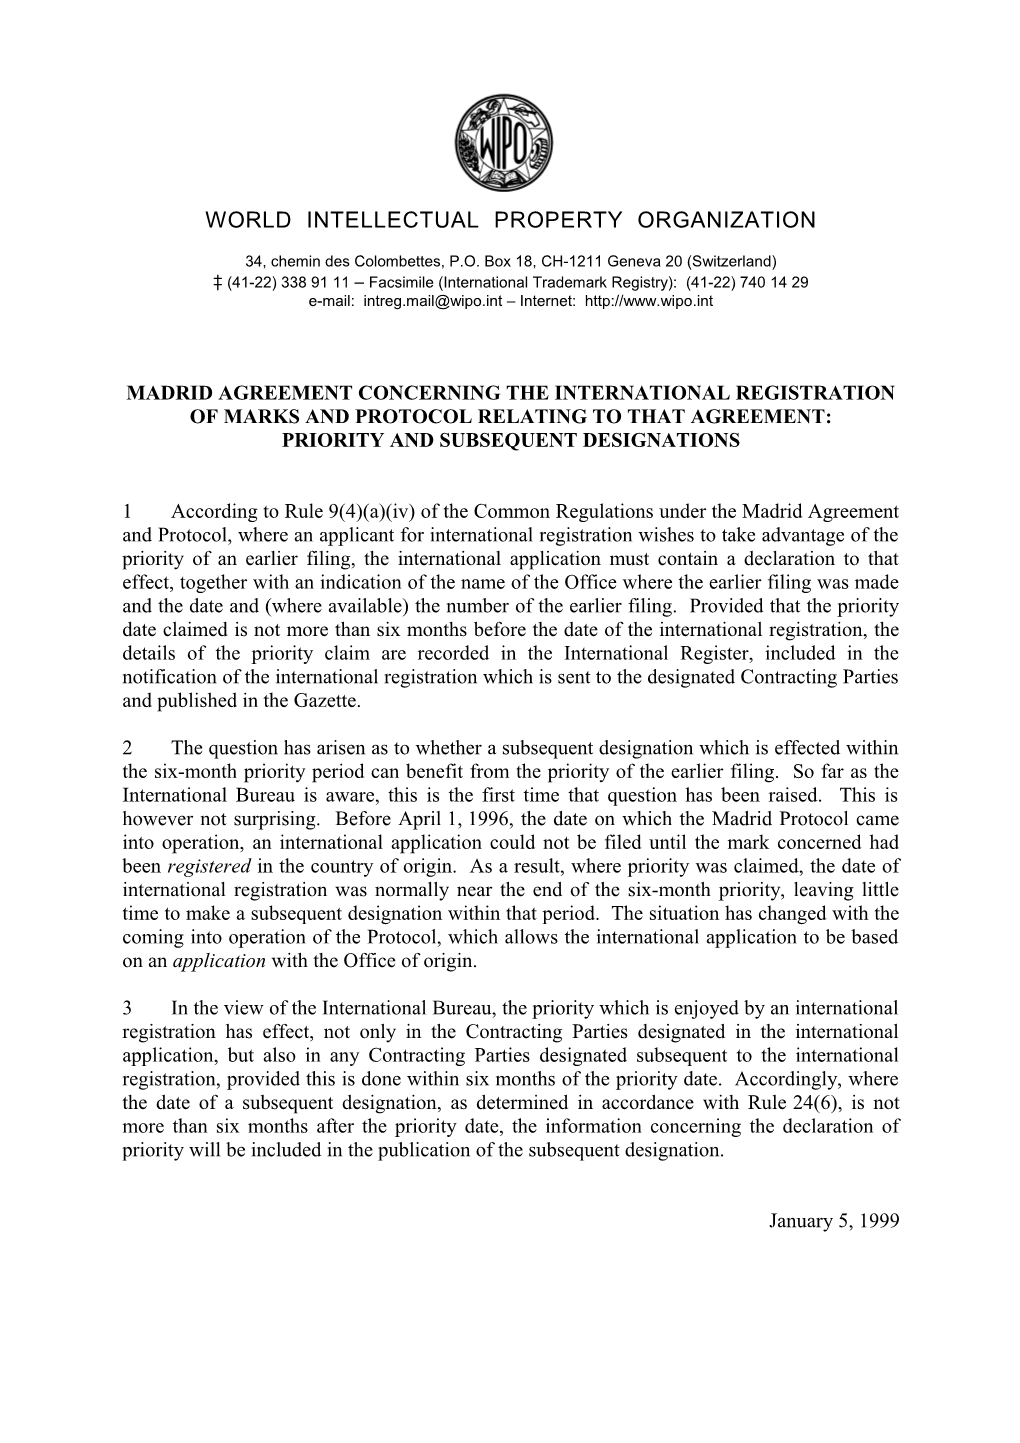 MADRID/1999/02 : Madrid Agreement Concerning the International Registration of Marks And